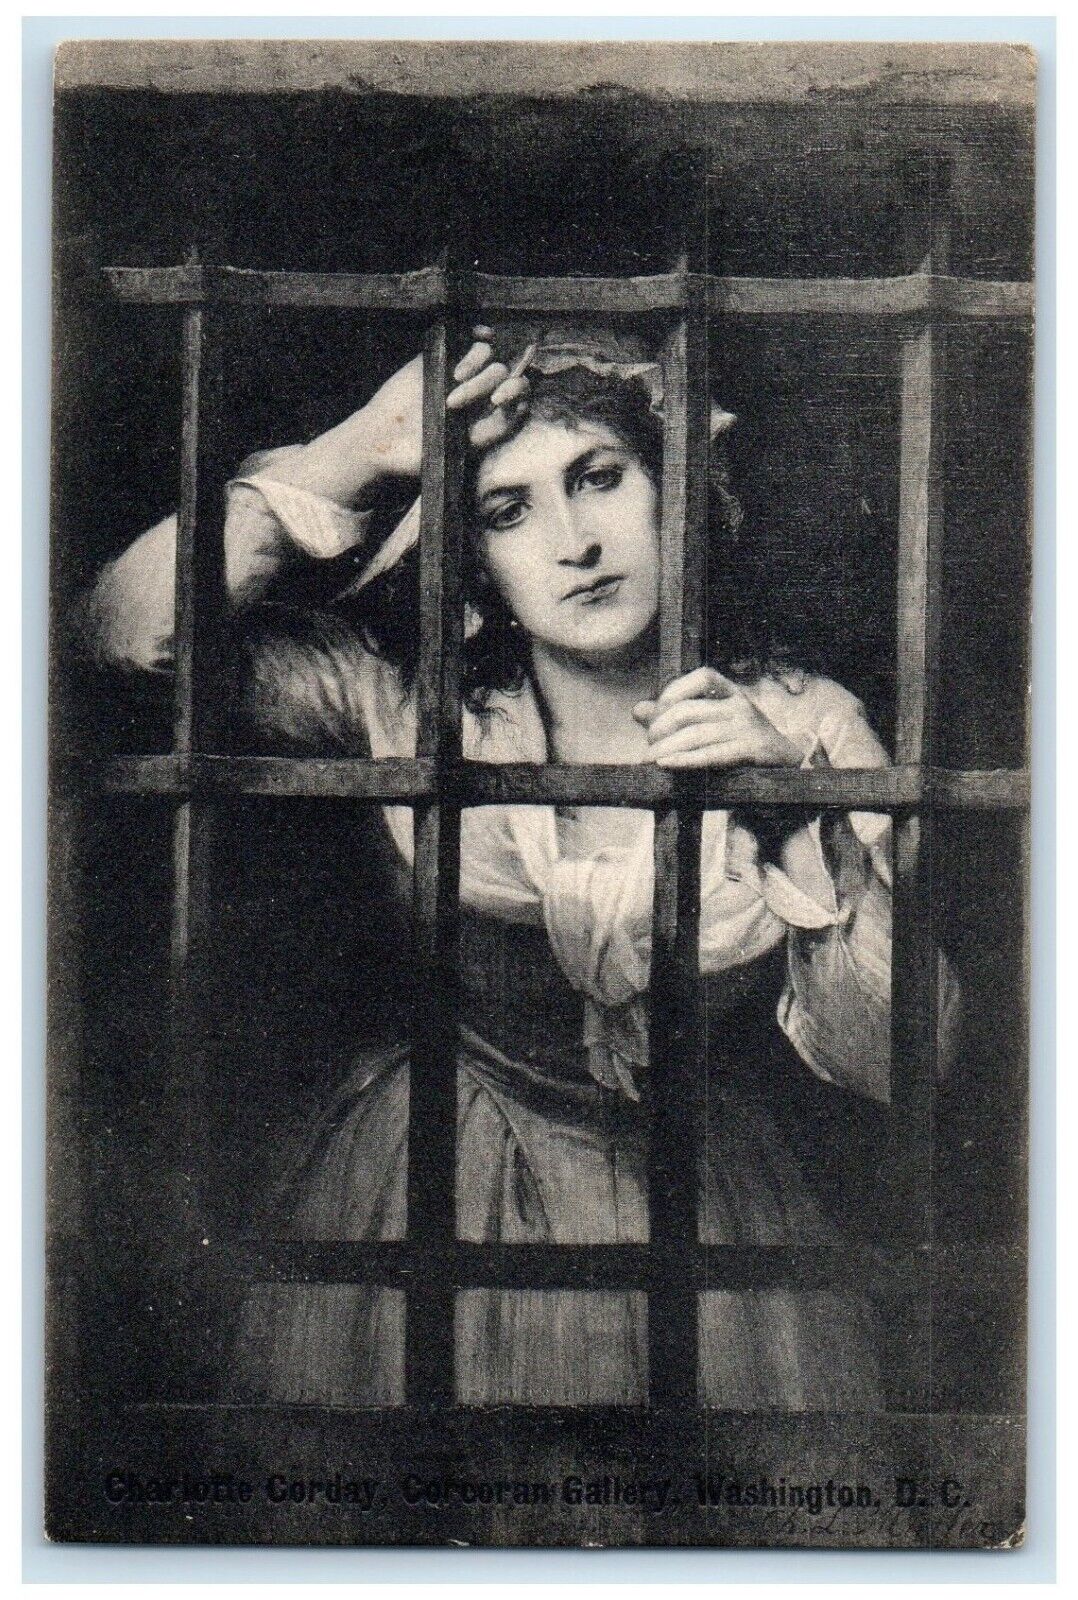 1907 Charlotte Corday Corcoran Gallery Washington DC, Woman In Jail Postcard